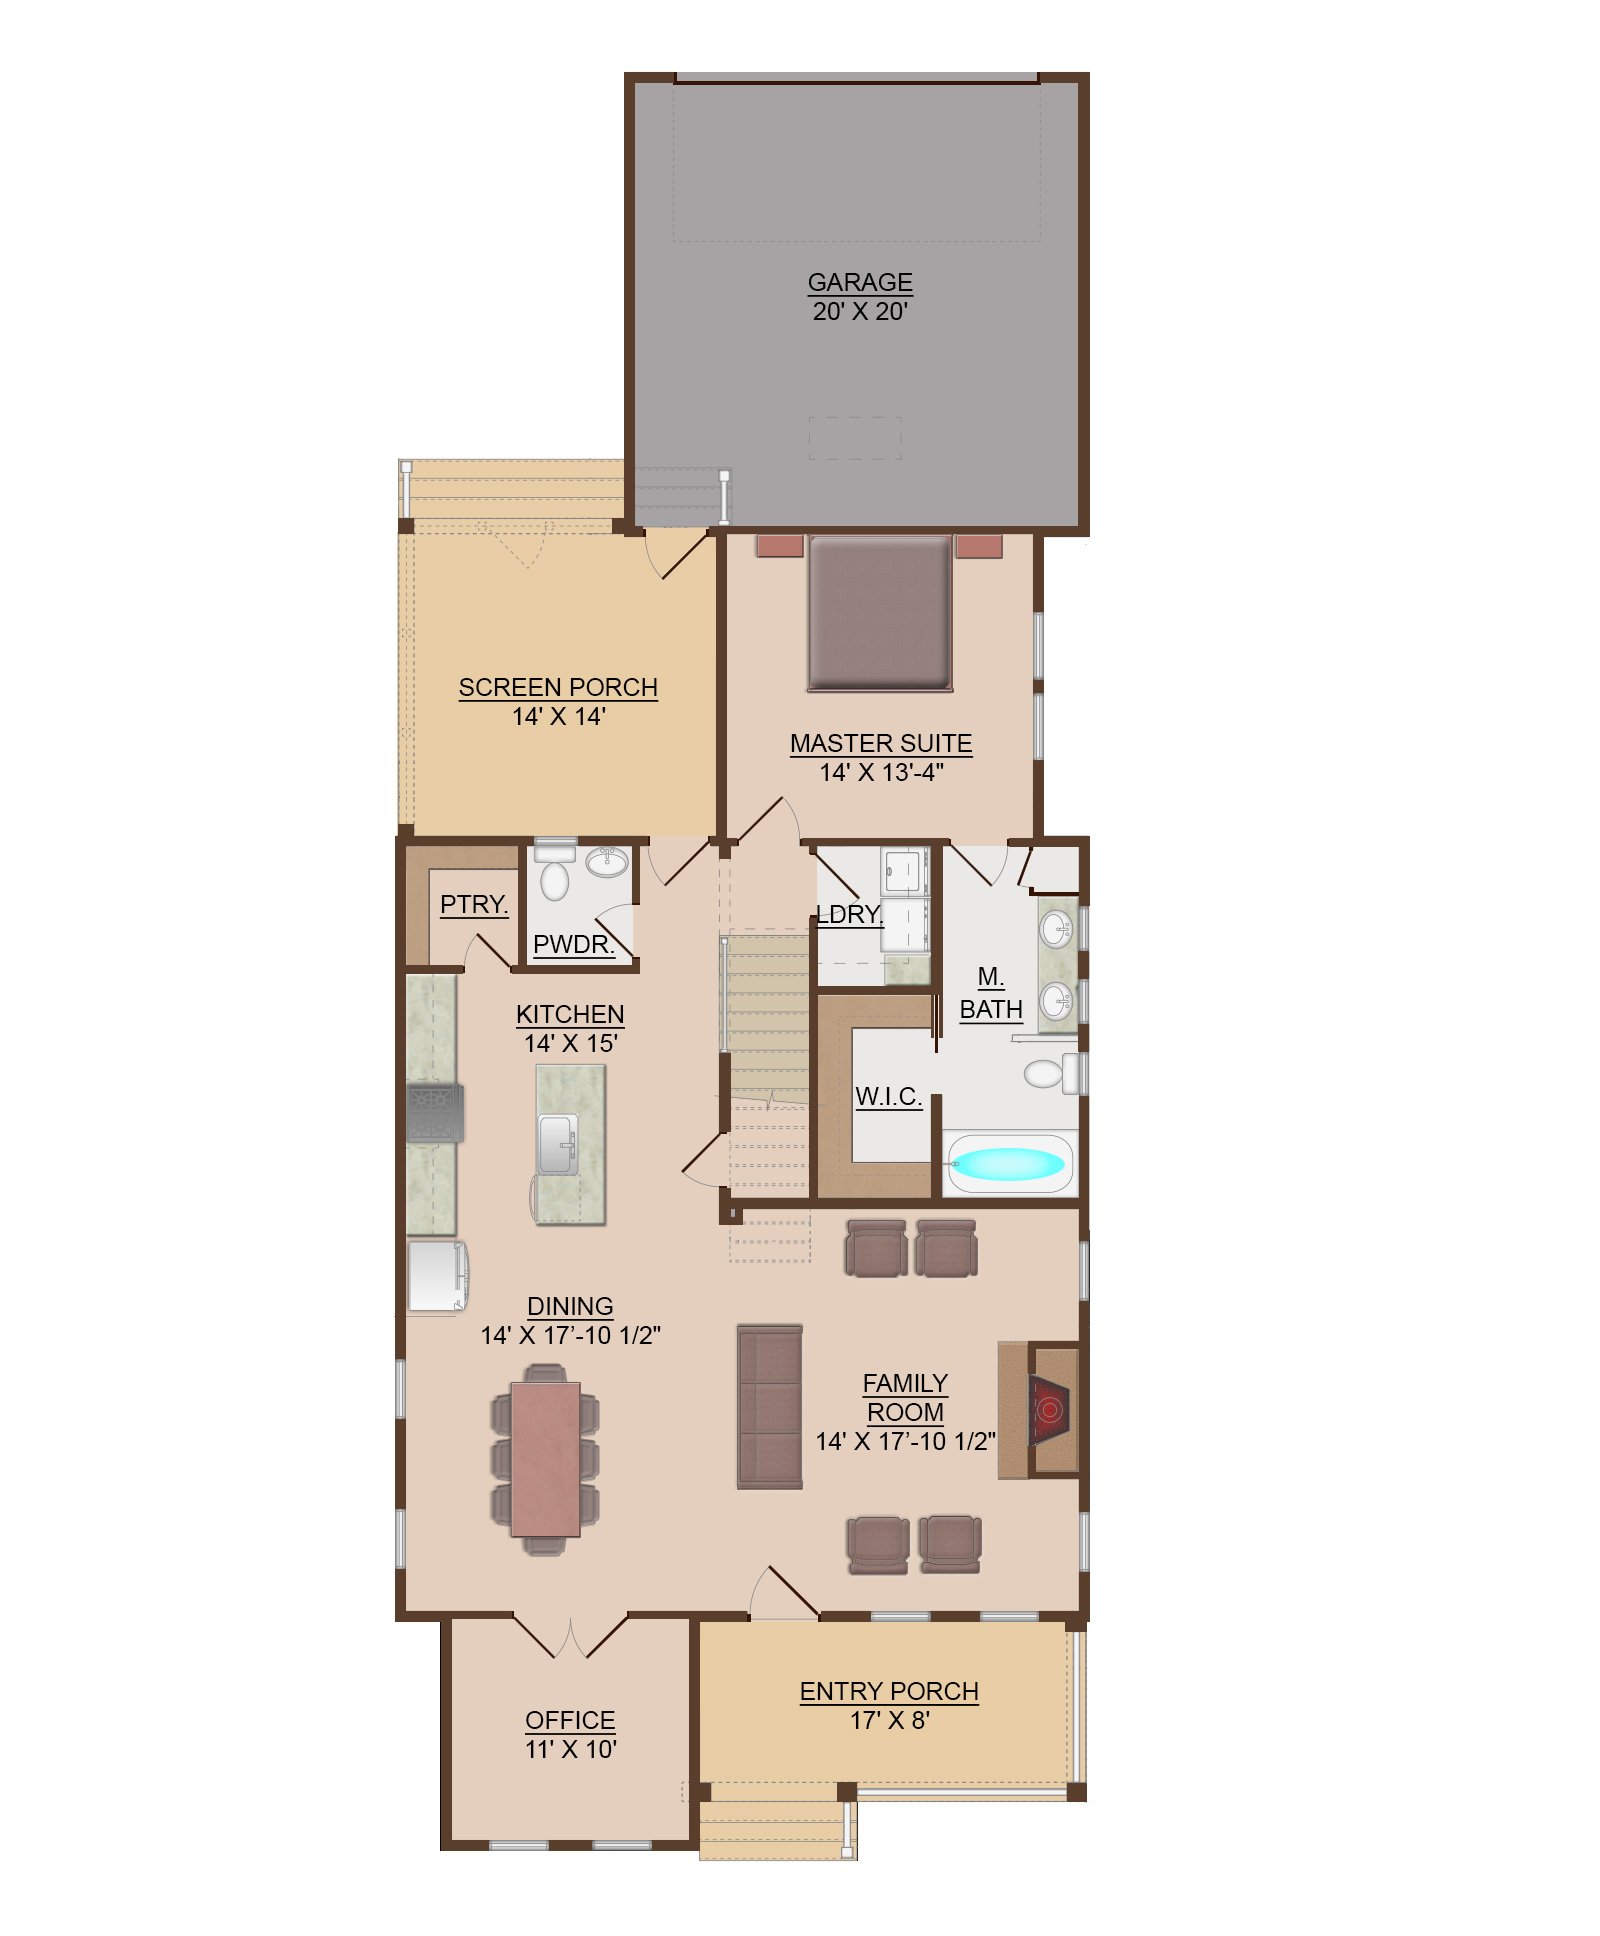 Most Popular 31+ 20x20 Family Room Floor Plans